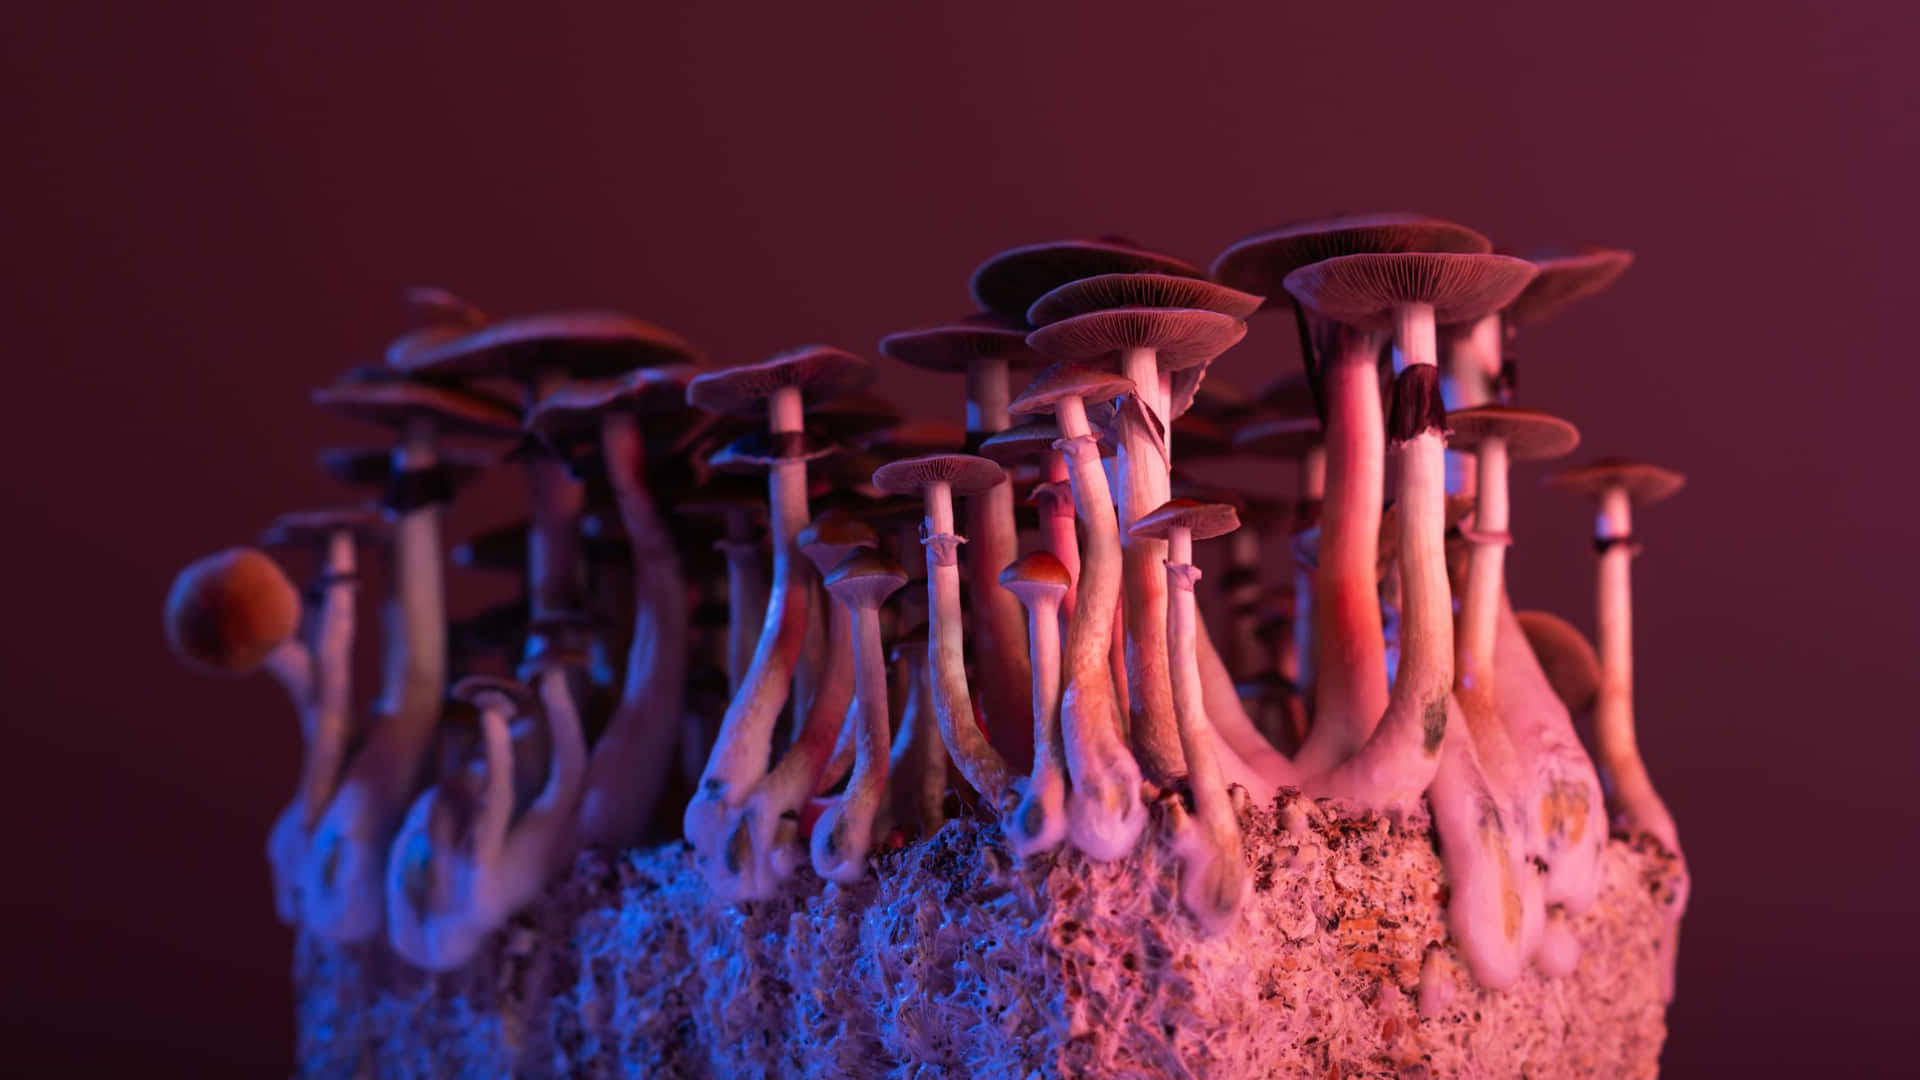 Mushrooms Growing On A Rock